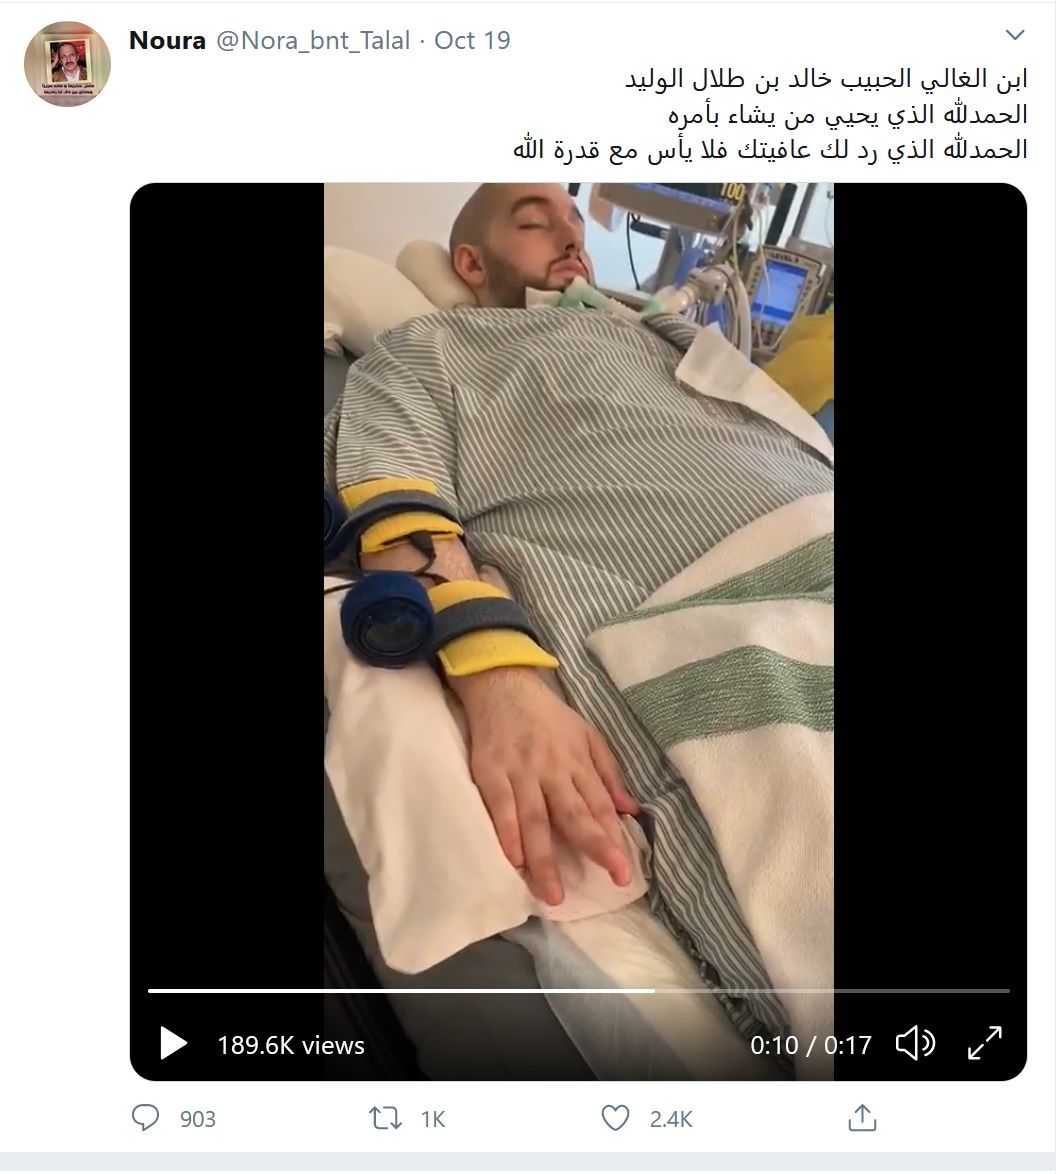 Pangeran Arab Saudi, Al-Waleed bin Khalid Al-Saud akhirnya bisa menggerakkan tangannya setelah 15 tahun koma.